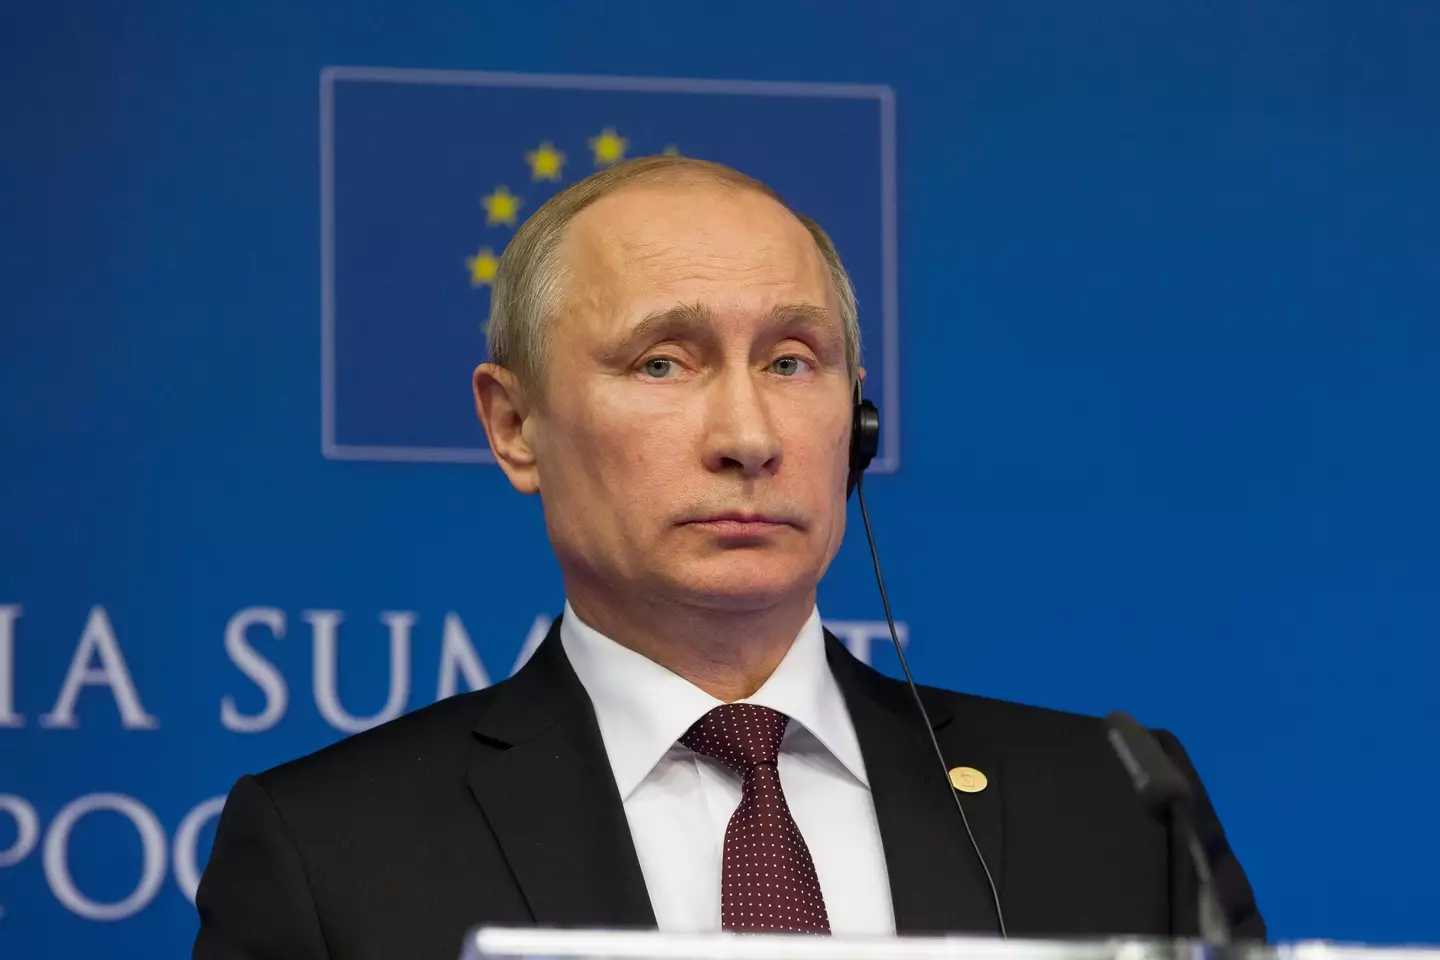 Vladimir Putin's latest announcement has caused chaos.